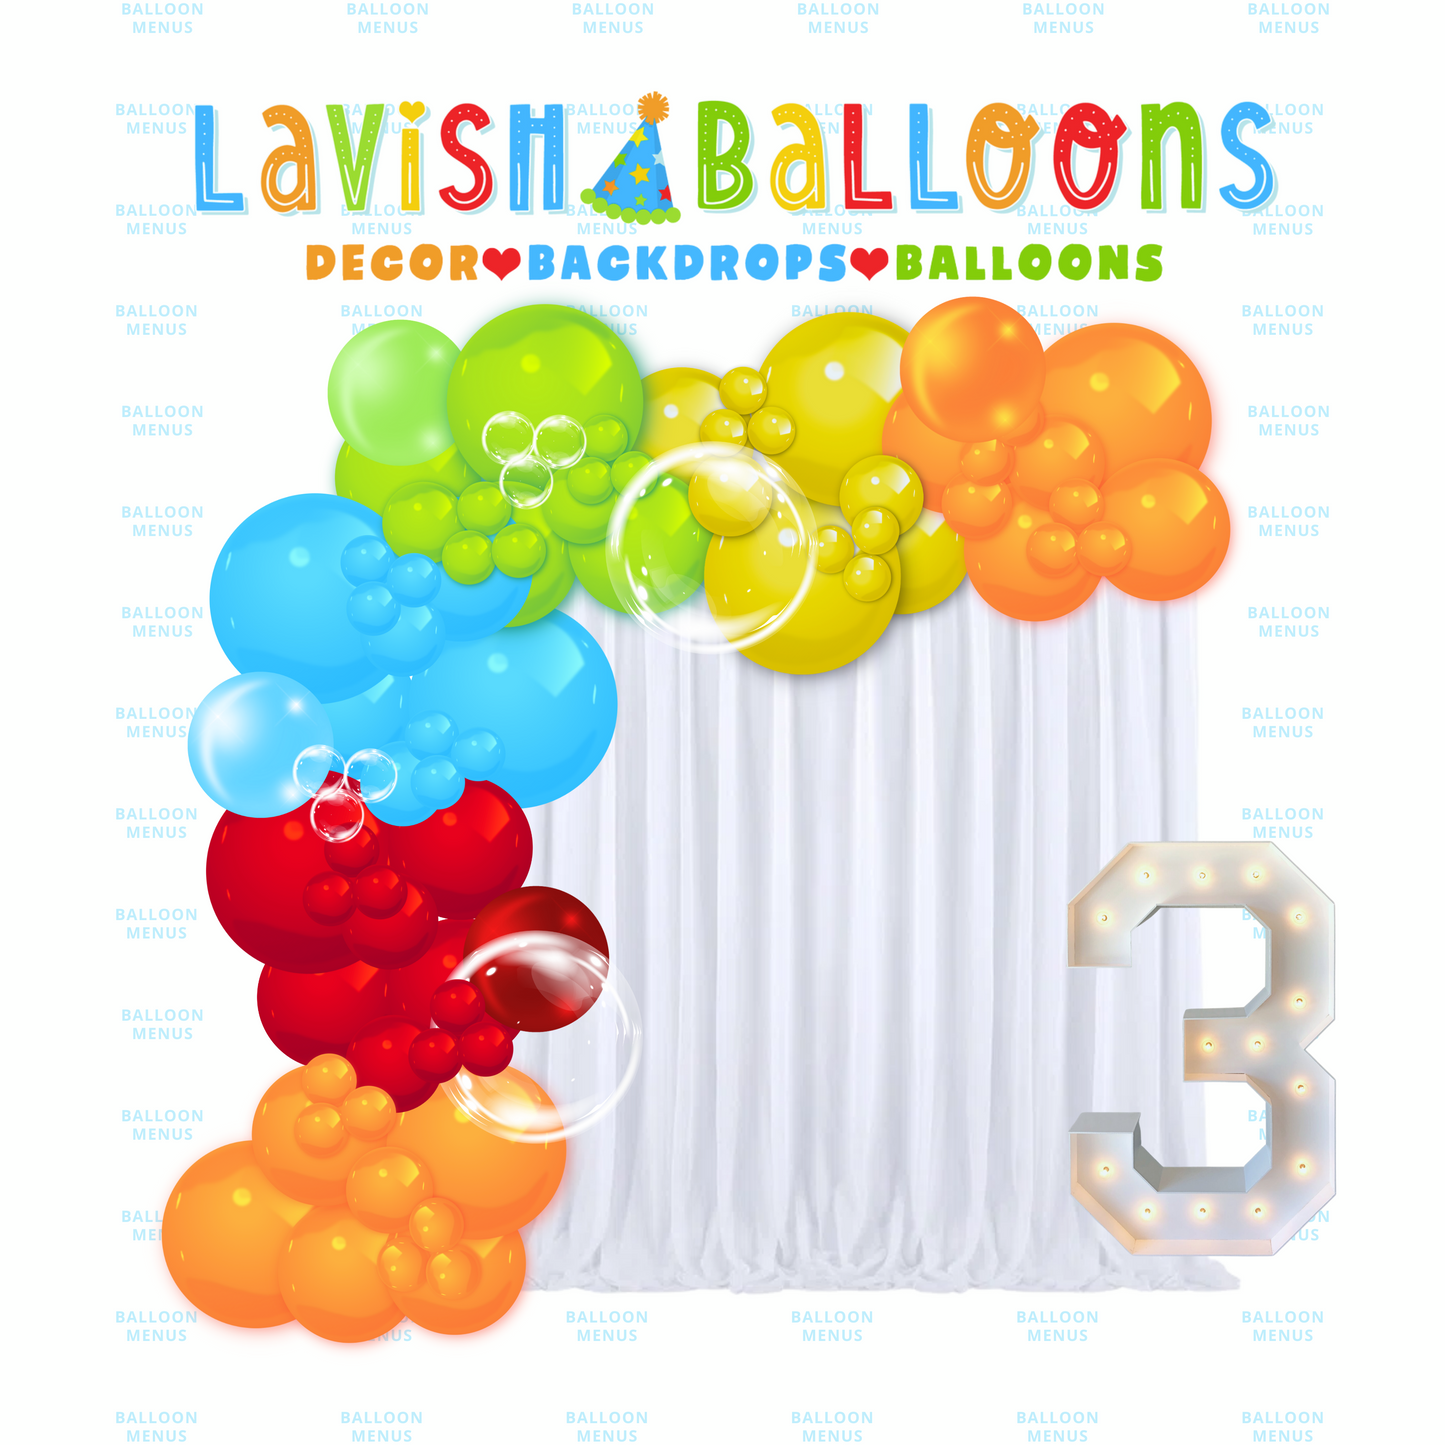 Little Lavish (Large Party Focal Point Illustrations)- Client Balloon Menu